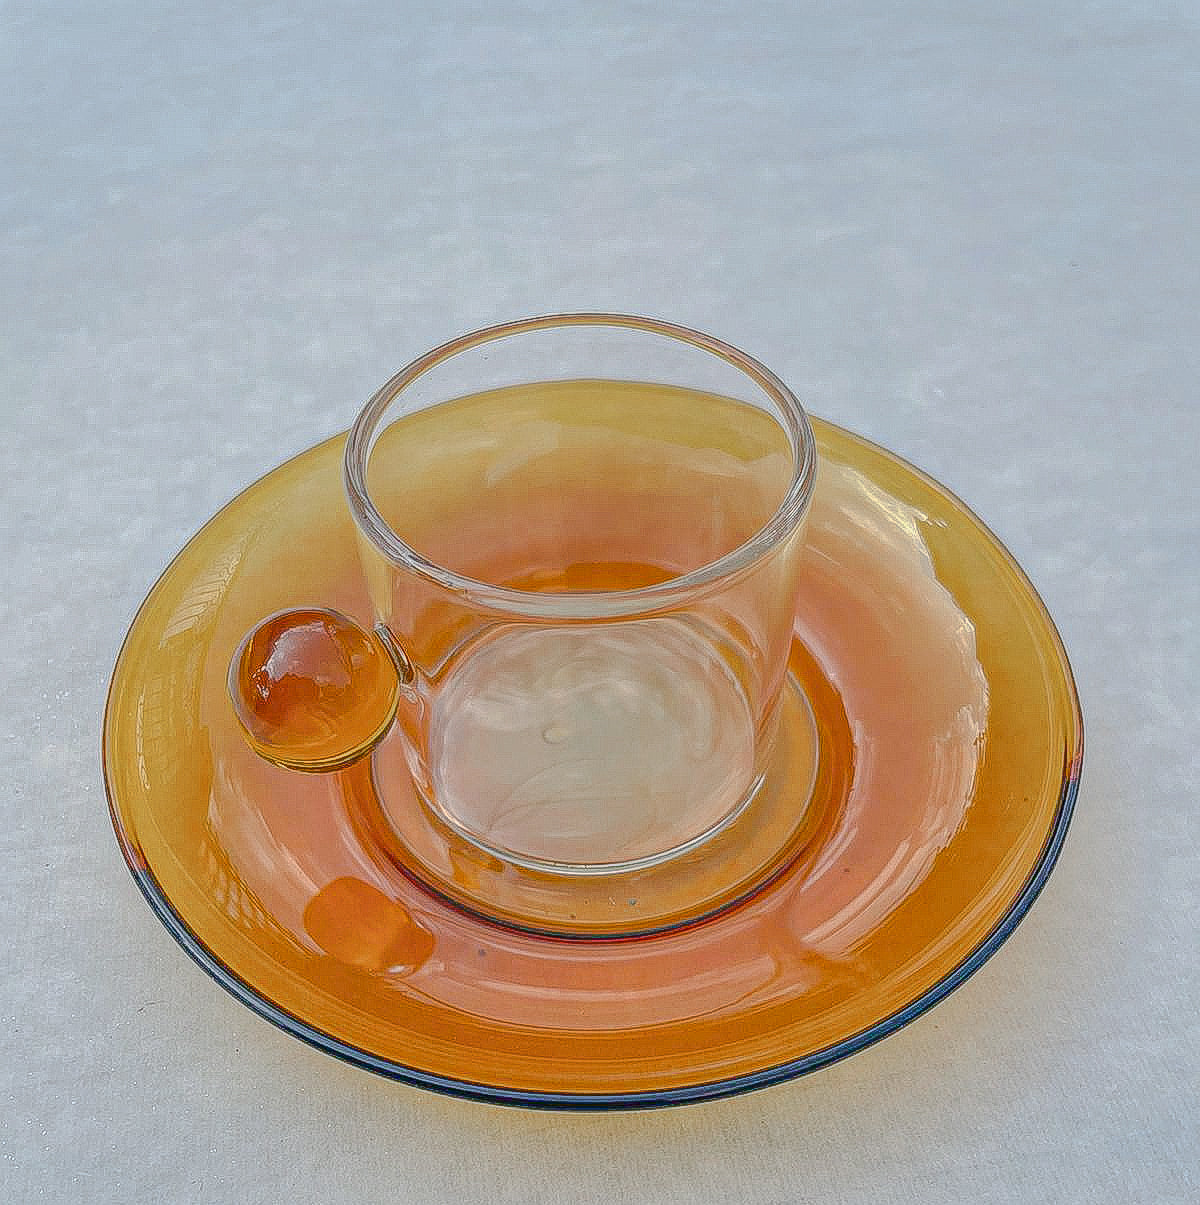 Amber Espresso Set by PROSE Tabletop